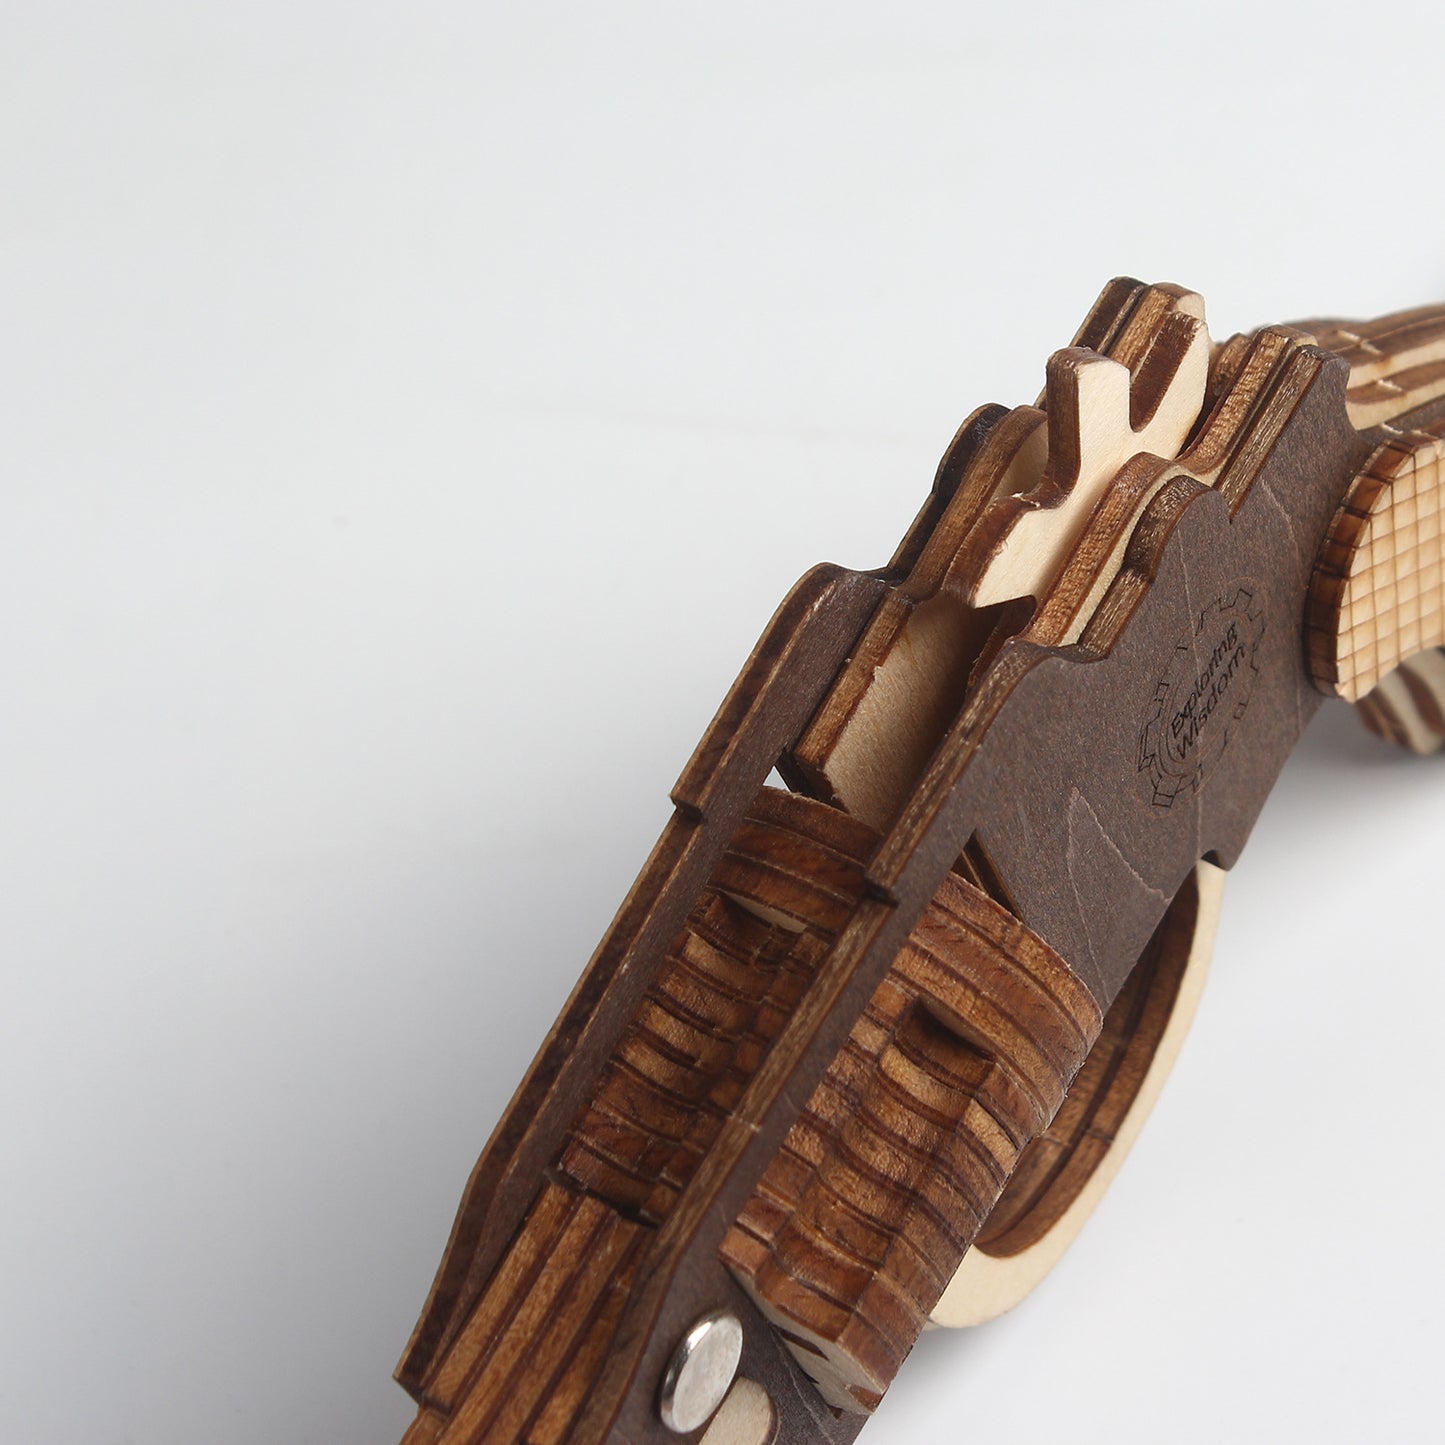 DIY 3D Colt Revolver Rubber Band Gun Wooden Puzzle Kit